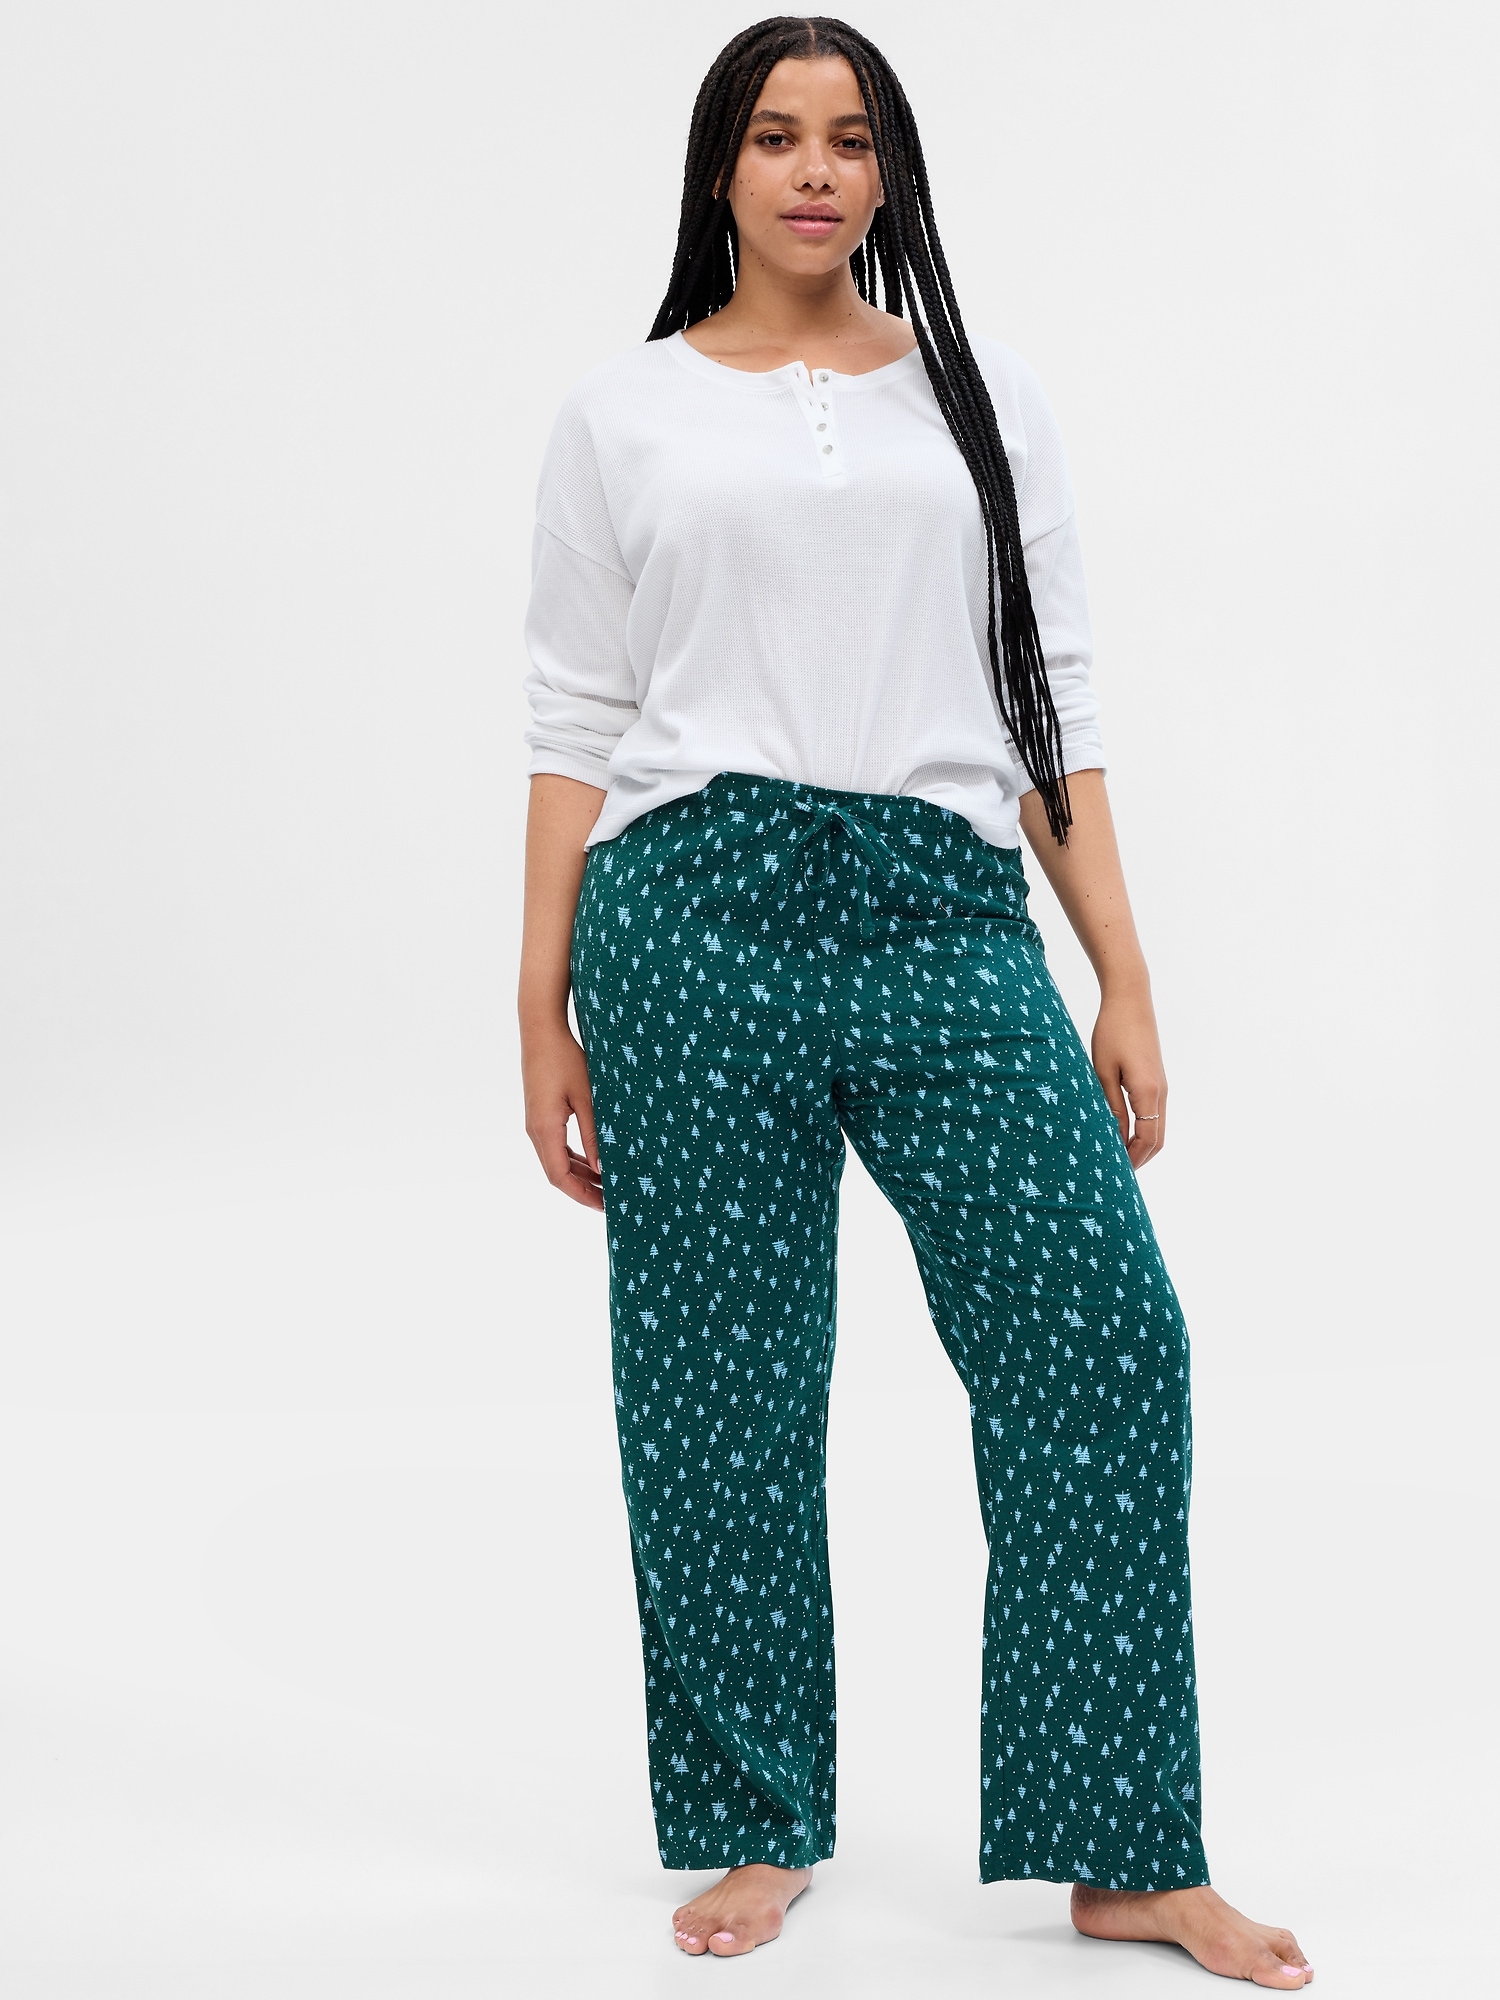 Patterned Flannel Jogger Plus-Size Pajama Pants